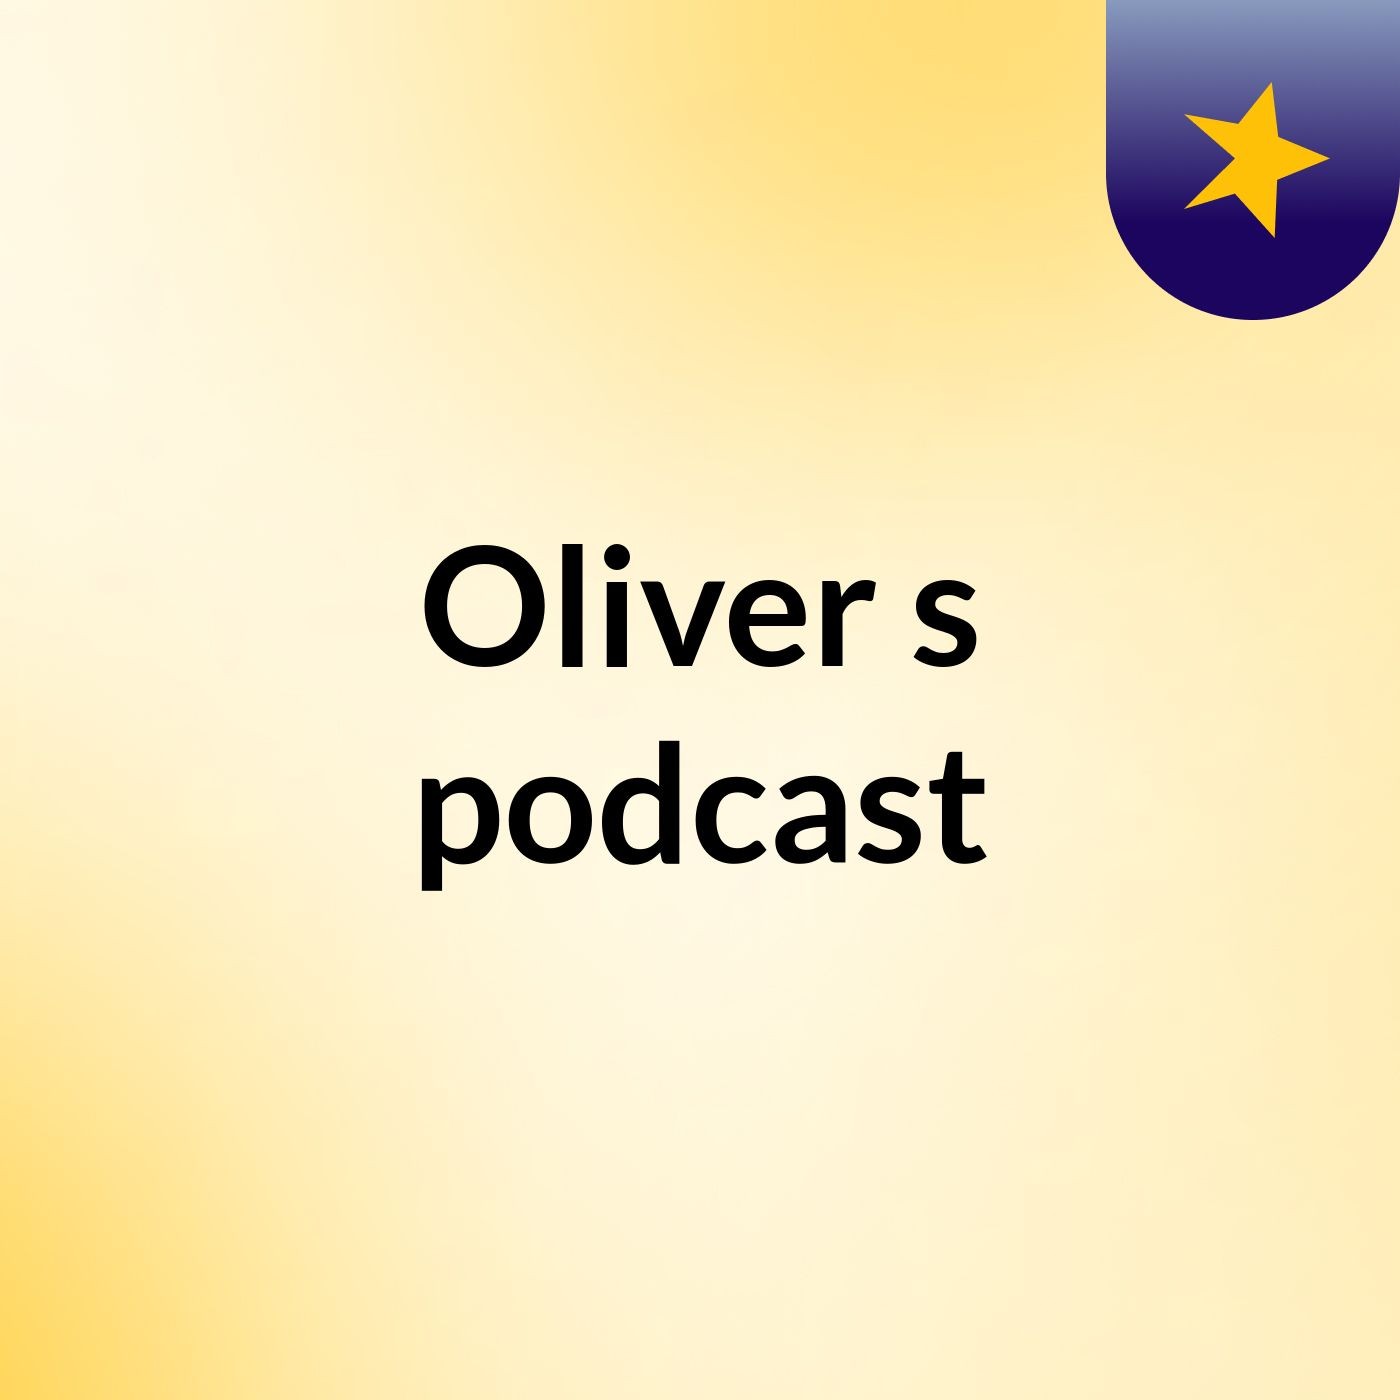 Oliver's podcast